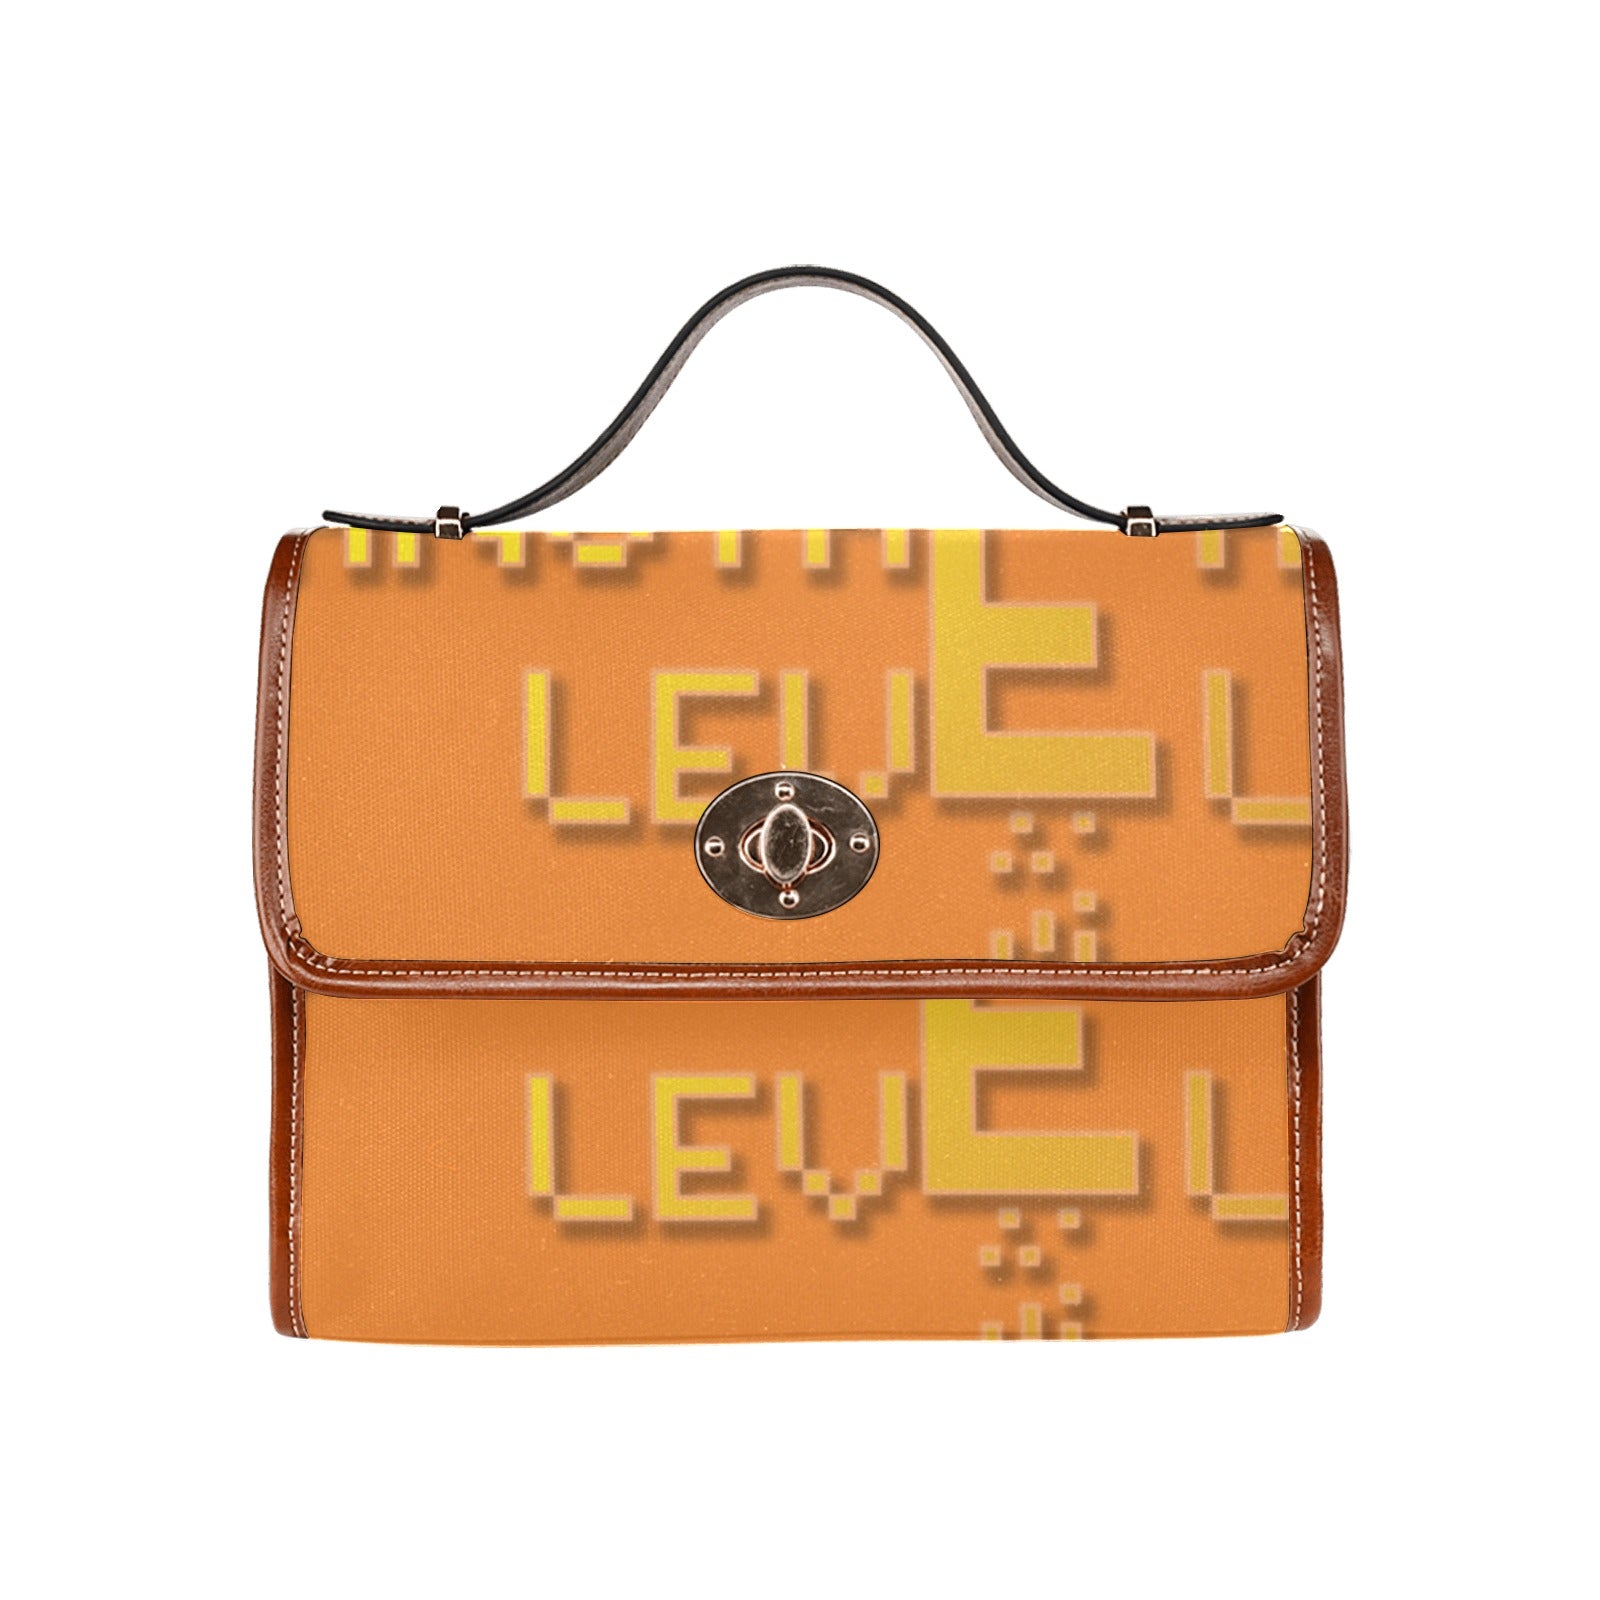 fz yellow levels handbag one size / fz - levels bag-orange all over print waterproof canvas bag(model1641)(brown strap)